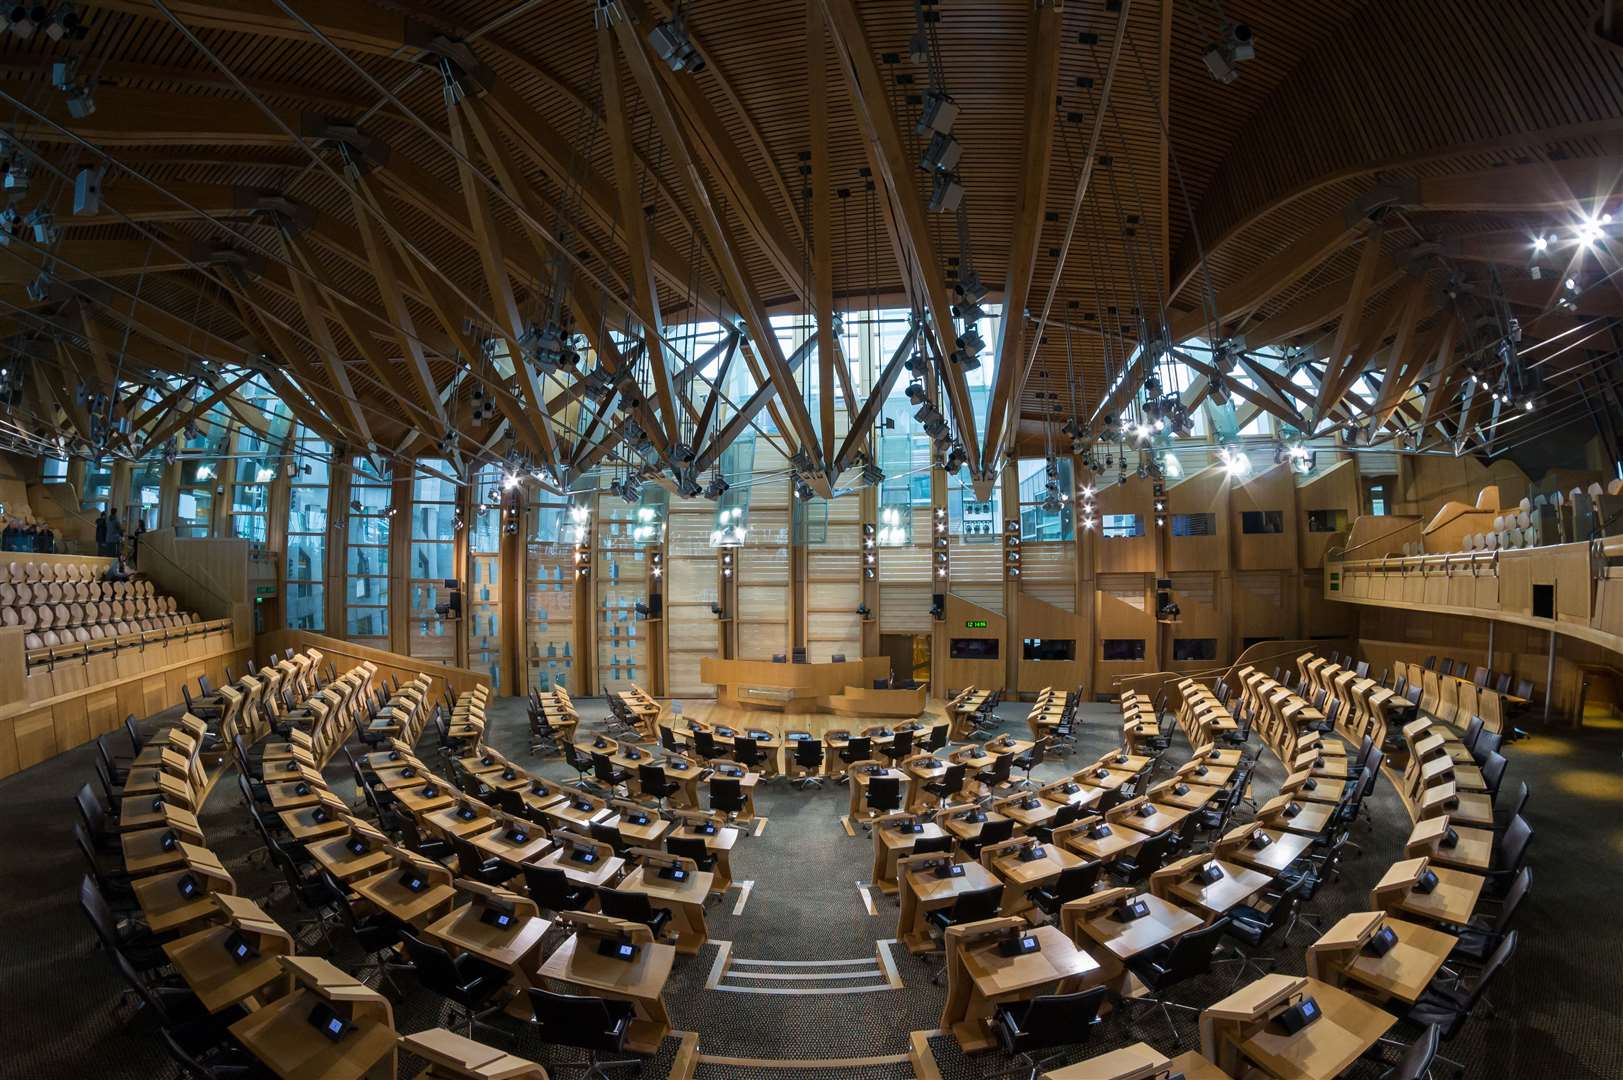 The Scottish Parliament debating chamber.